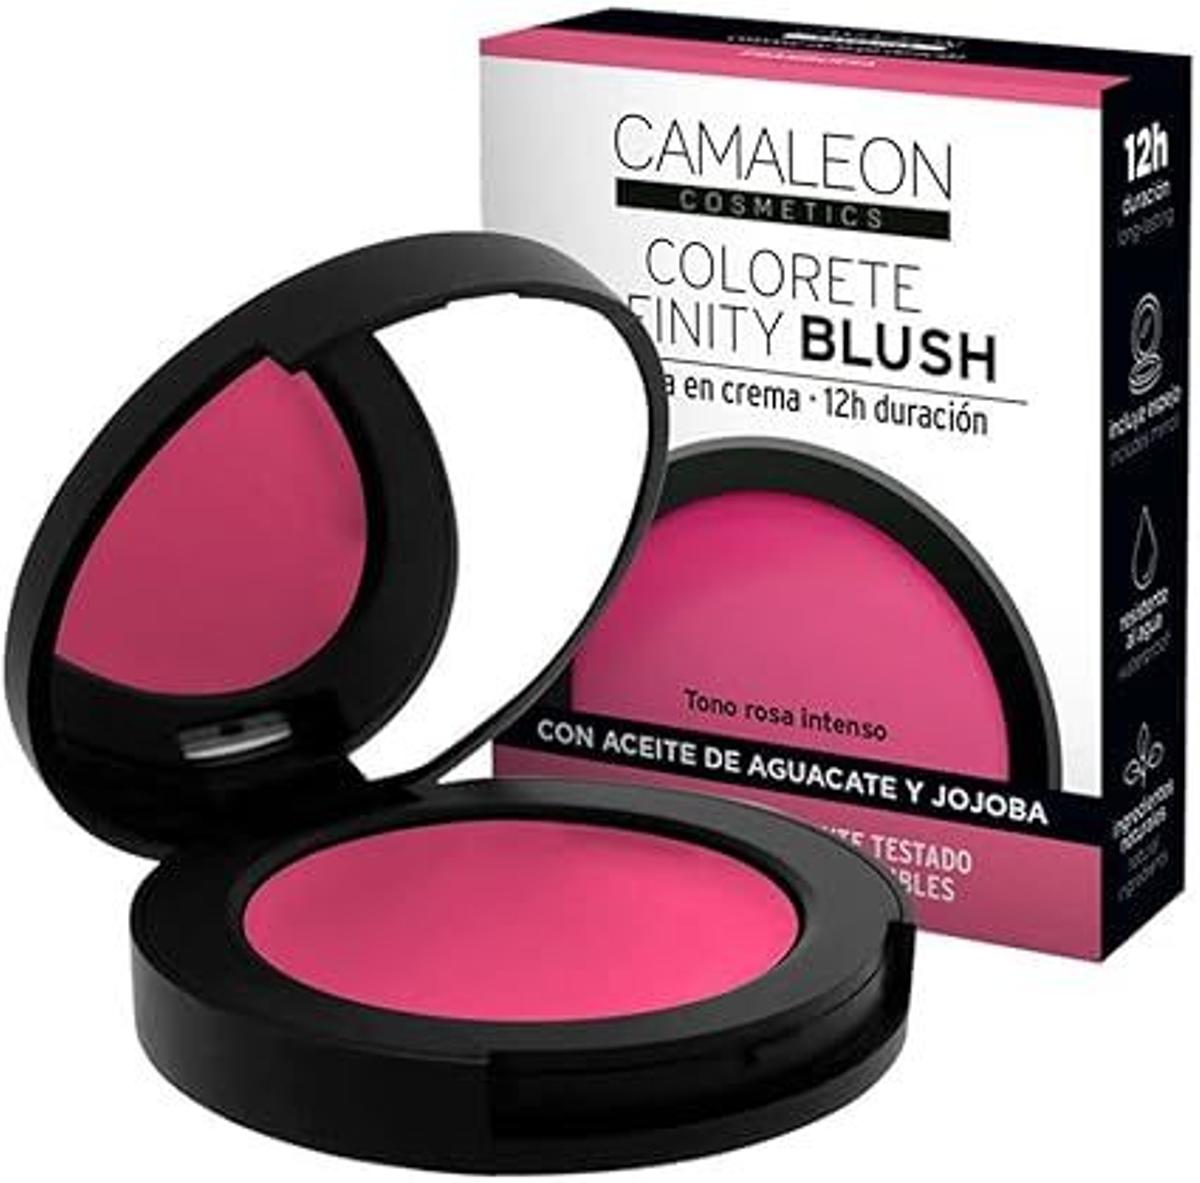 Camaleon Cosmetics   Colorete Infinity Blush 12 horas